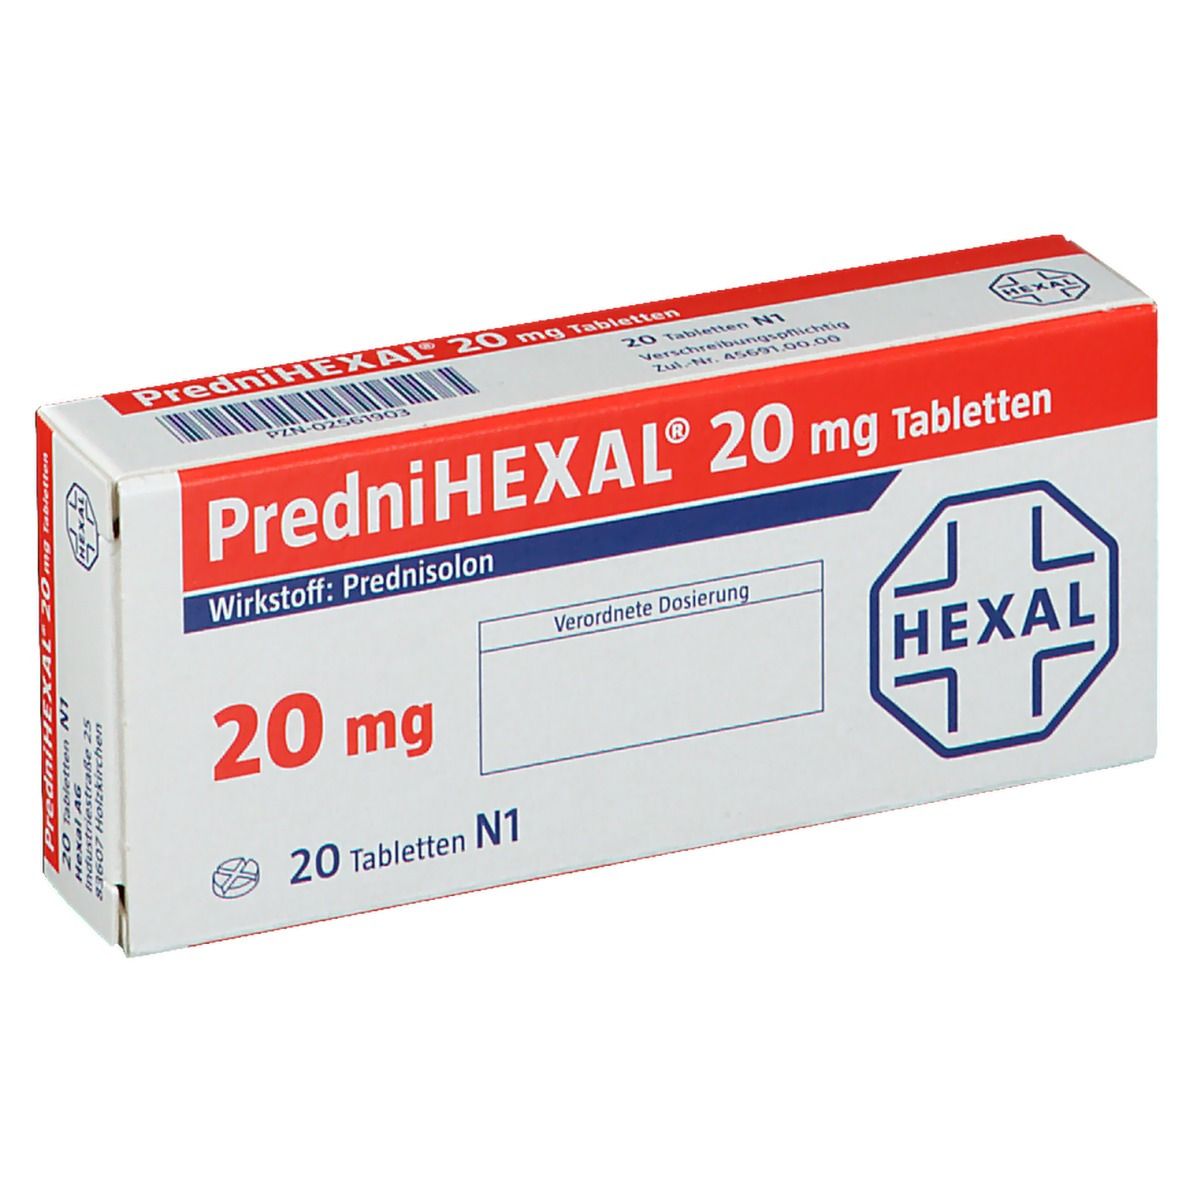 PredniHEXAL® 20 mg